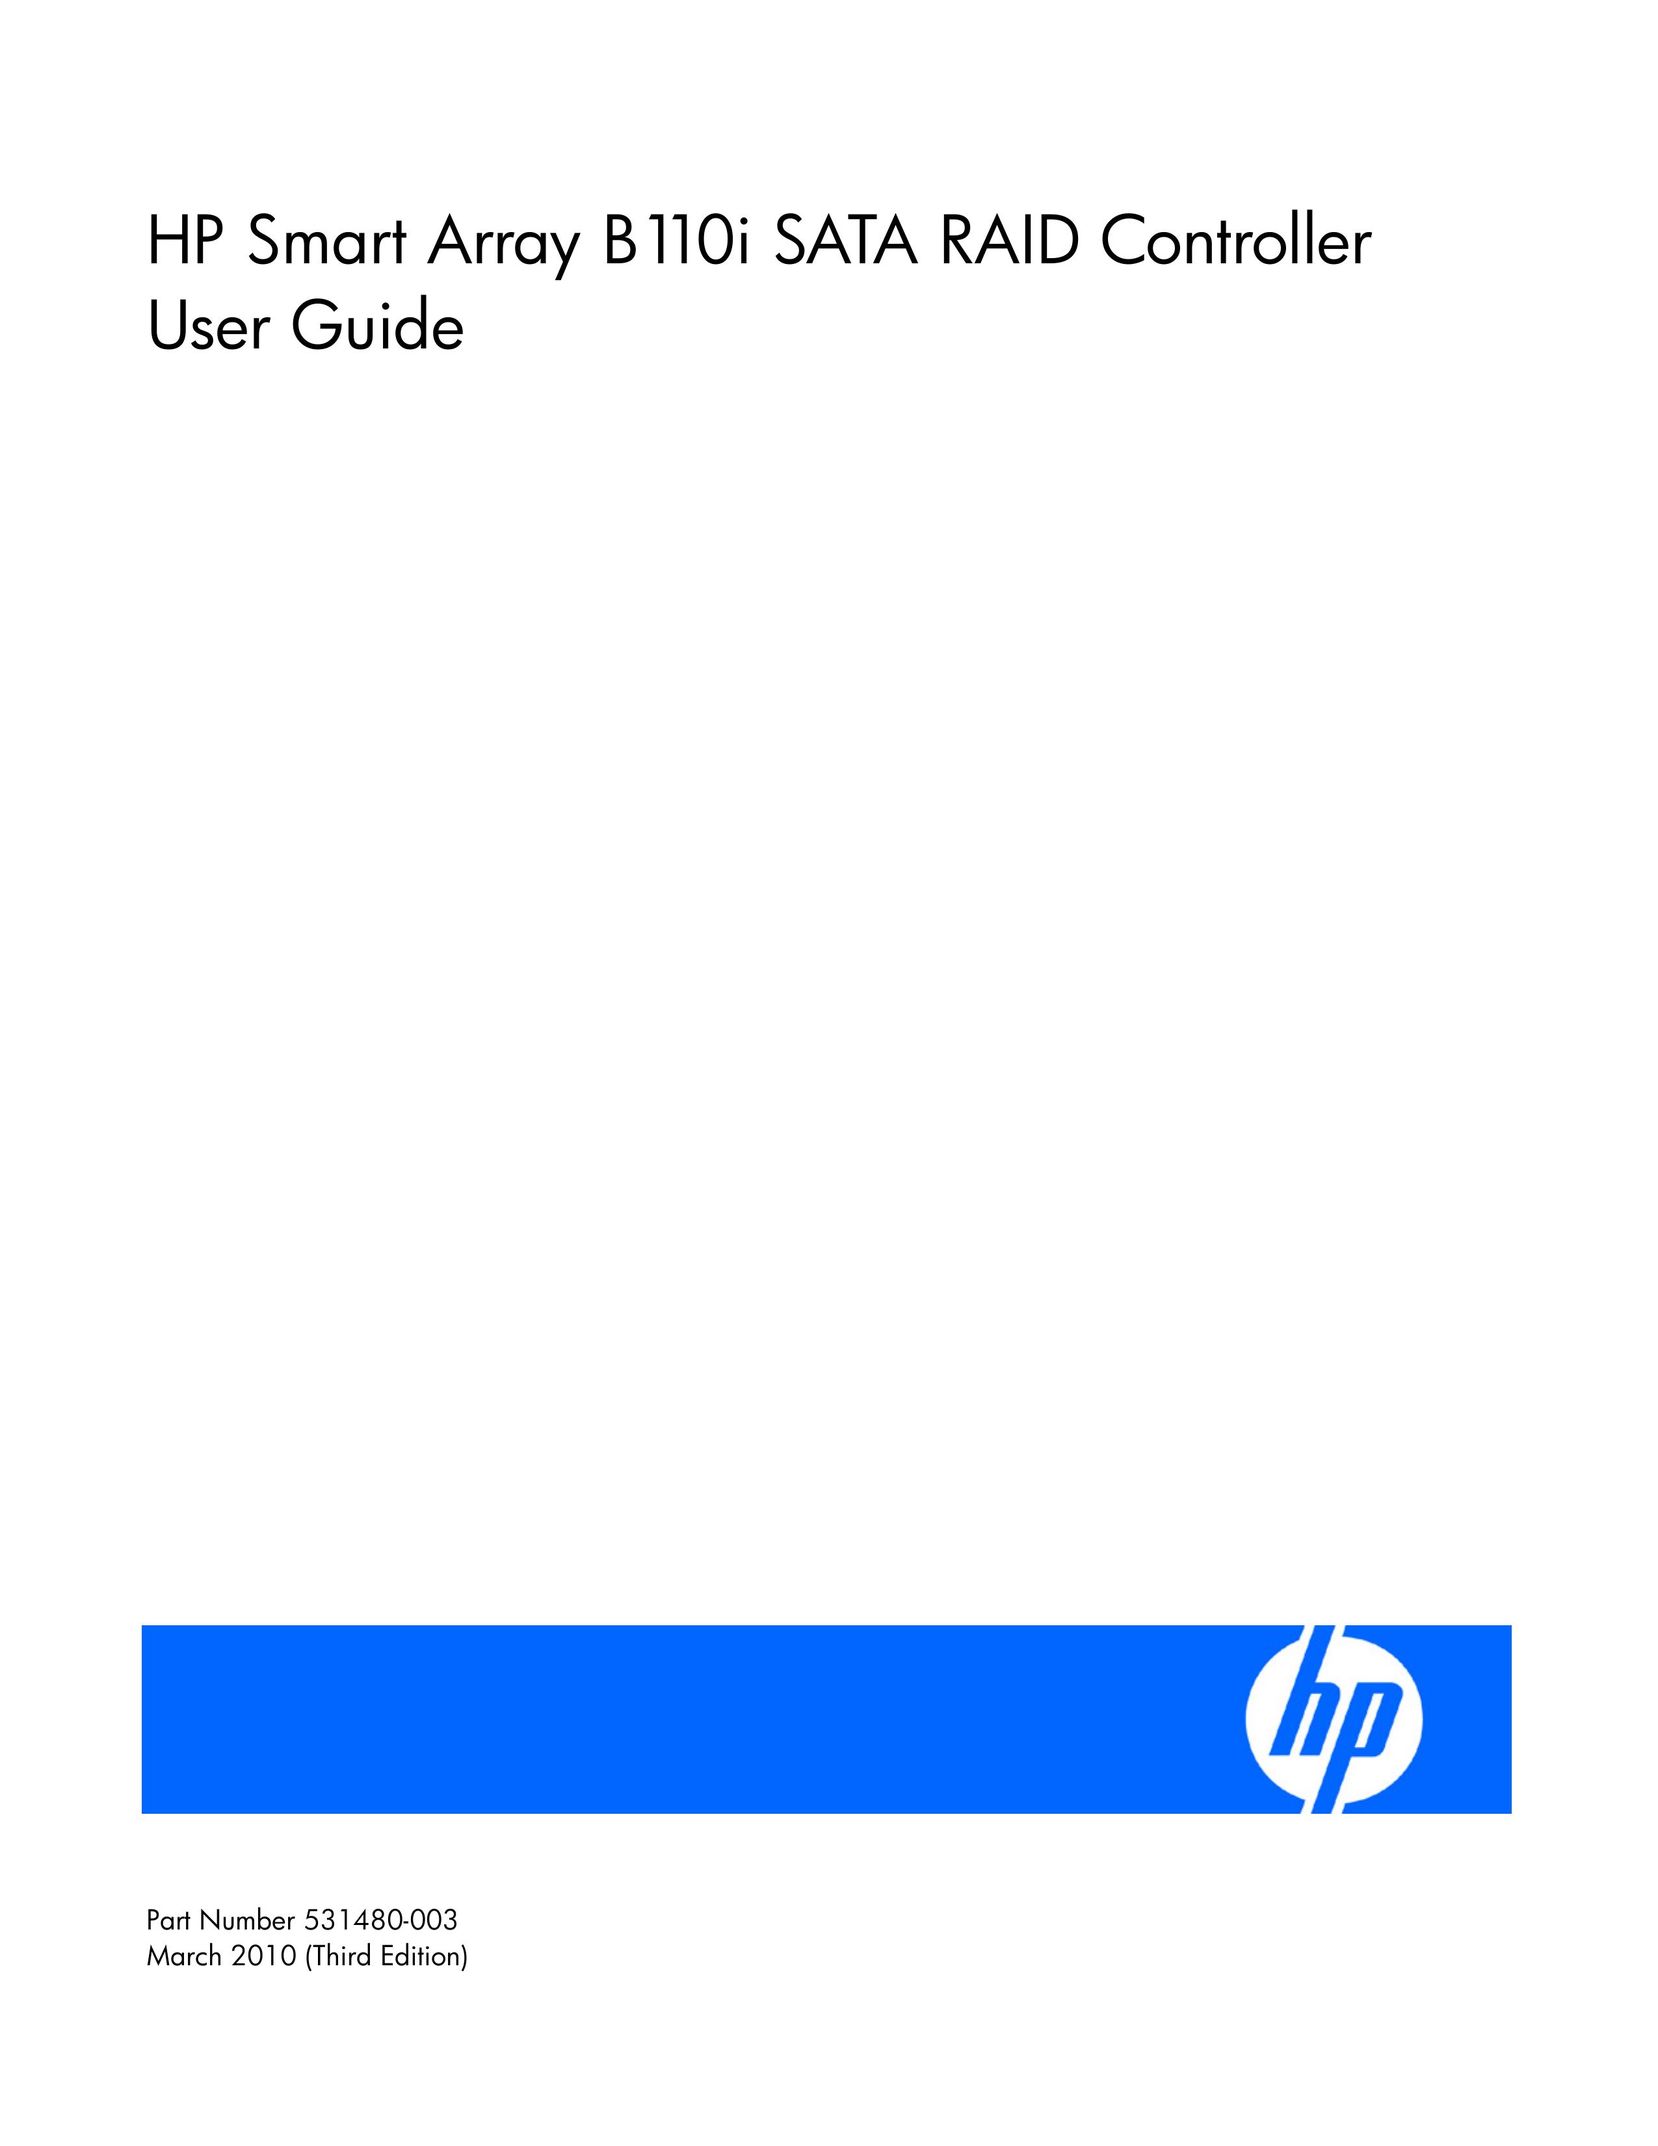 HP (Hewlett-Packard) B110I Computer Hardware User Manual